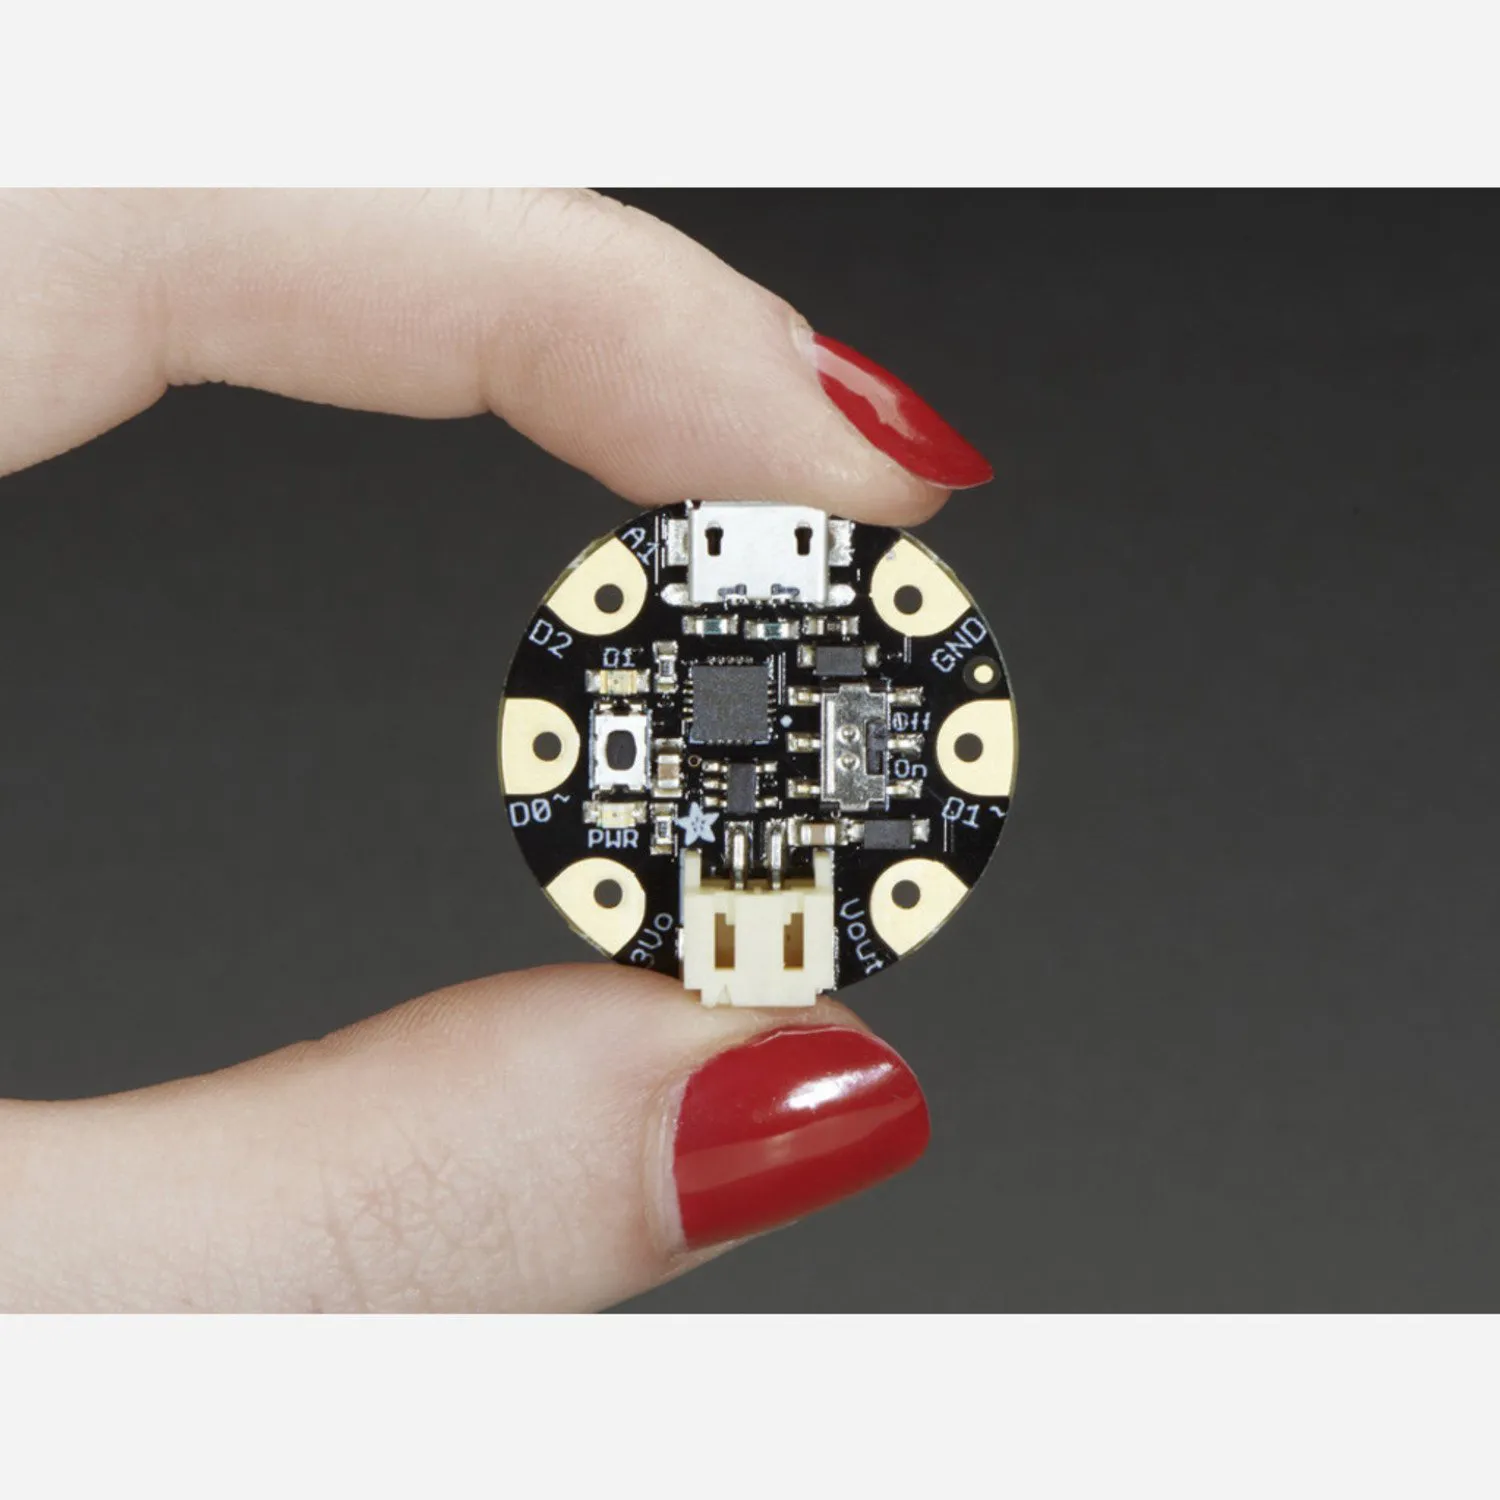 Photo of Adafruit GEMMA v2 - Miniature wearable electronic platform